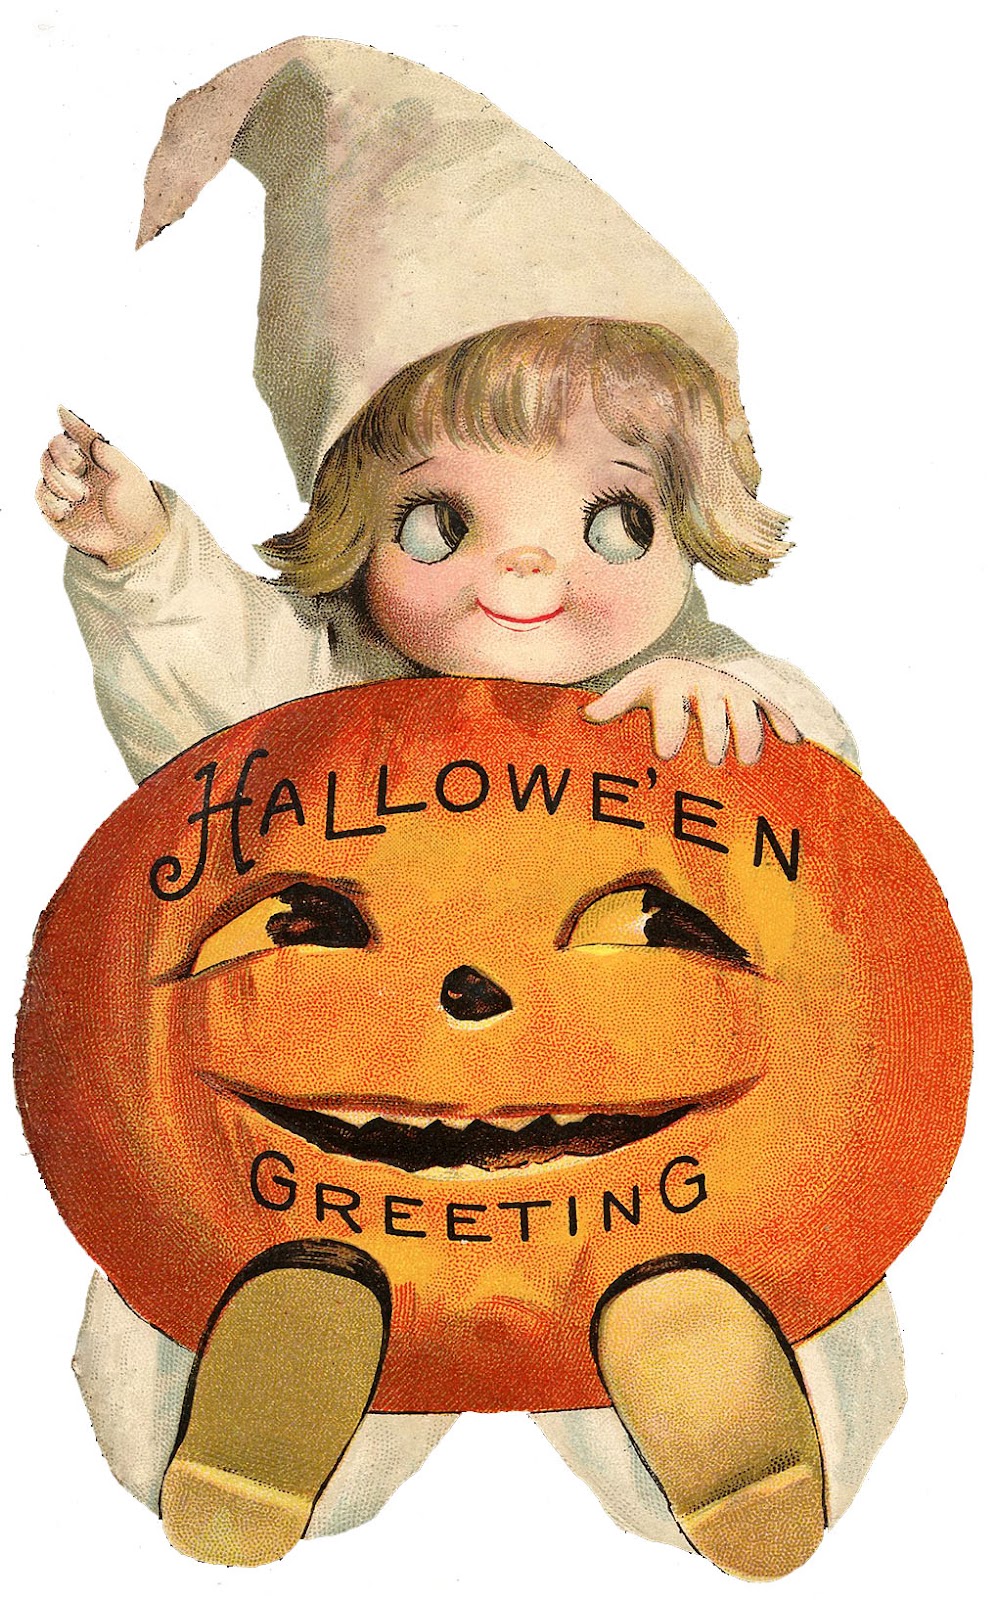 Vintage Halloween Clip Art u2013 Googly Eye Pumpkin Girl